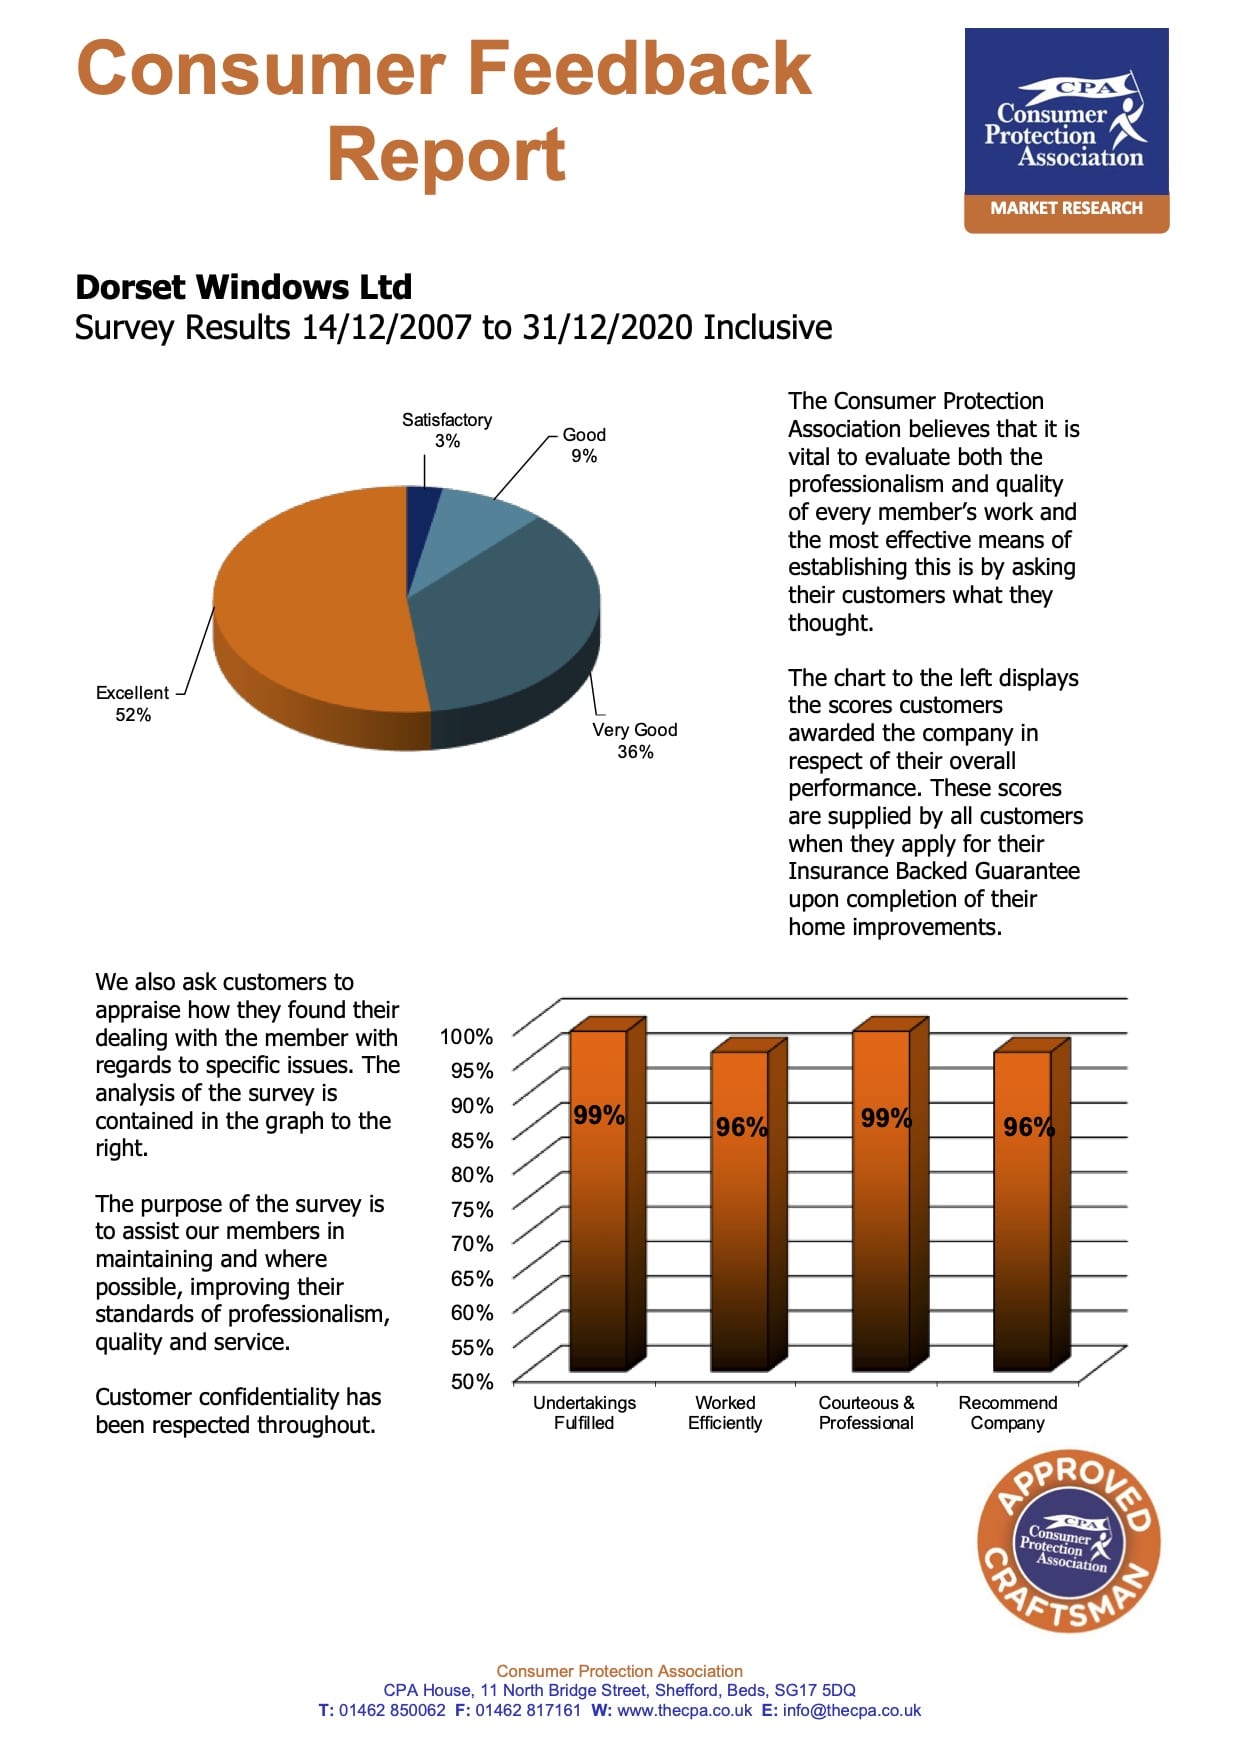 Dorset Windows Customer Feedback Report PDF